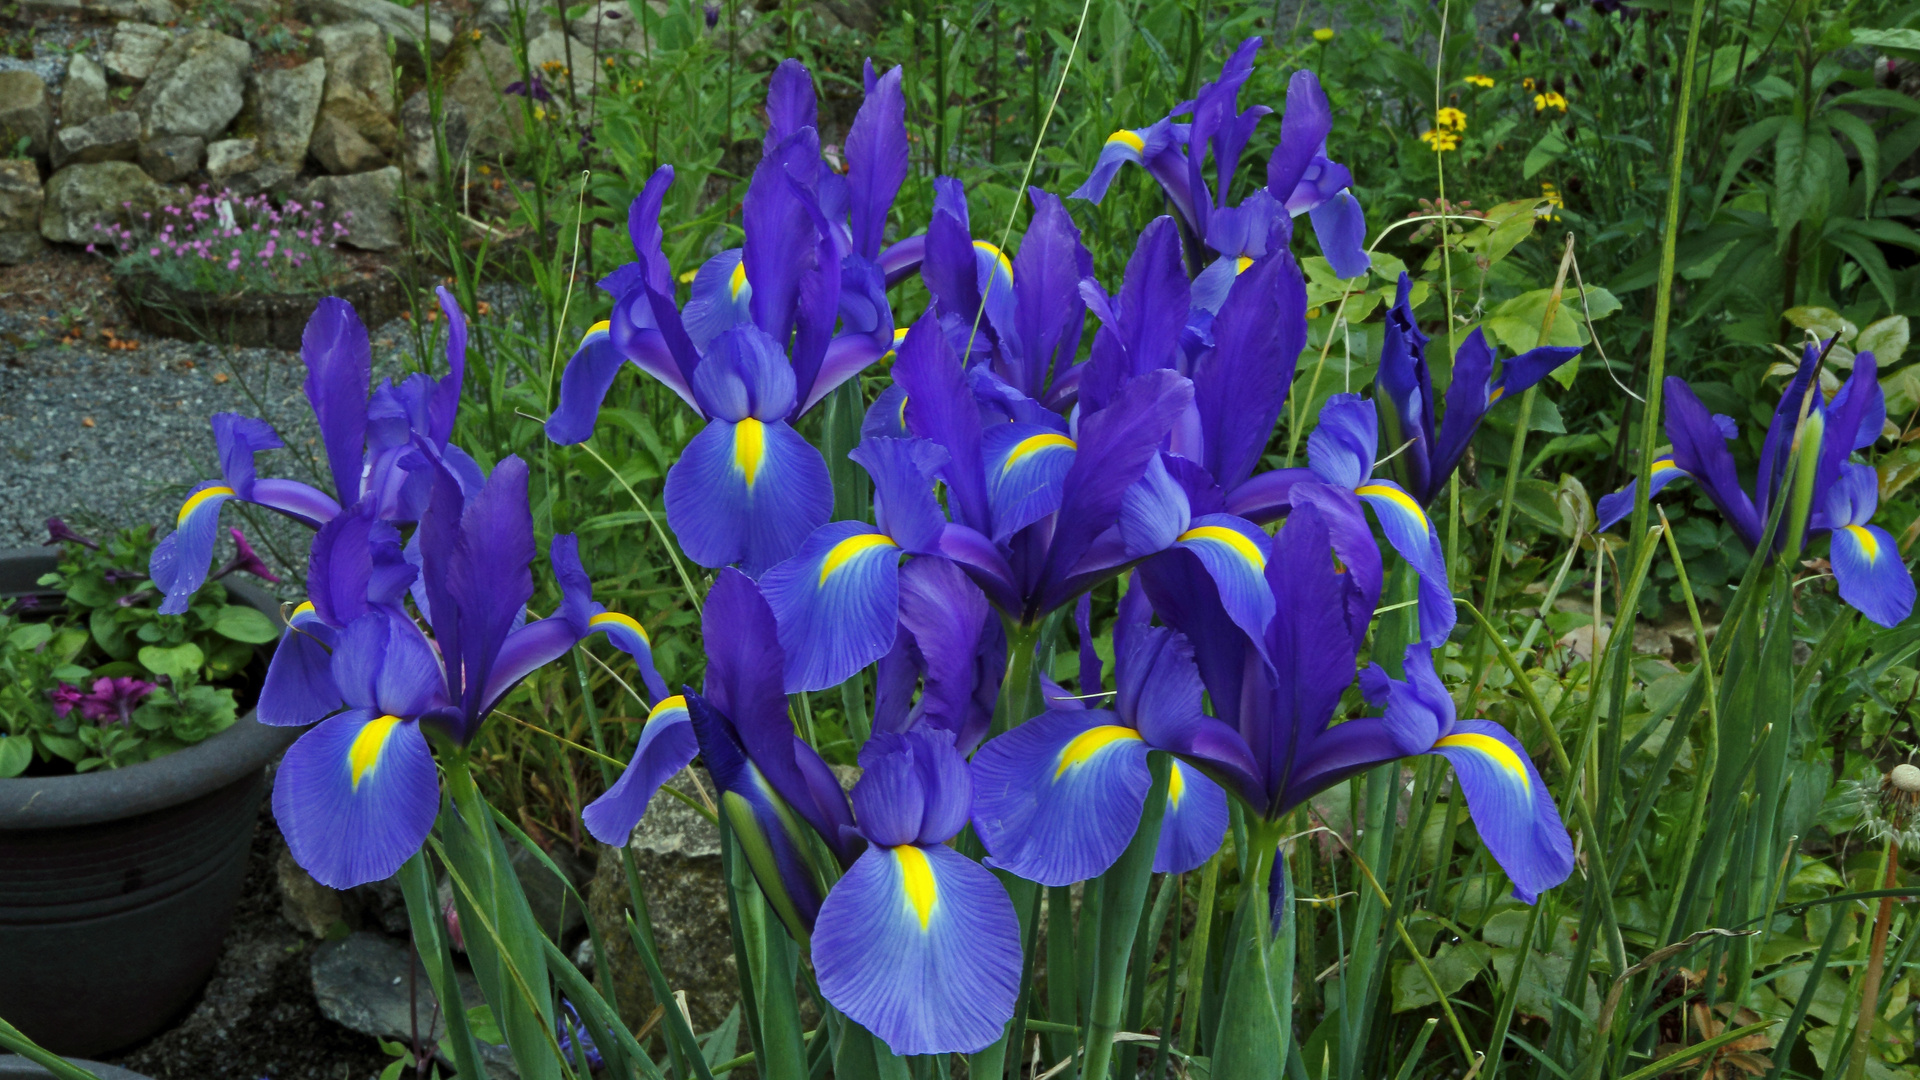 Iris als schöner Blickfang mit intensiv gefärbten Blüten...